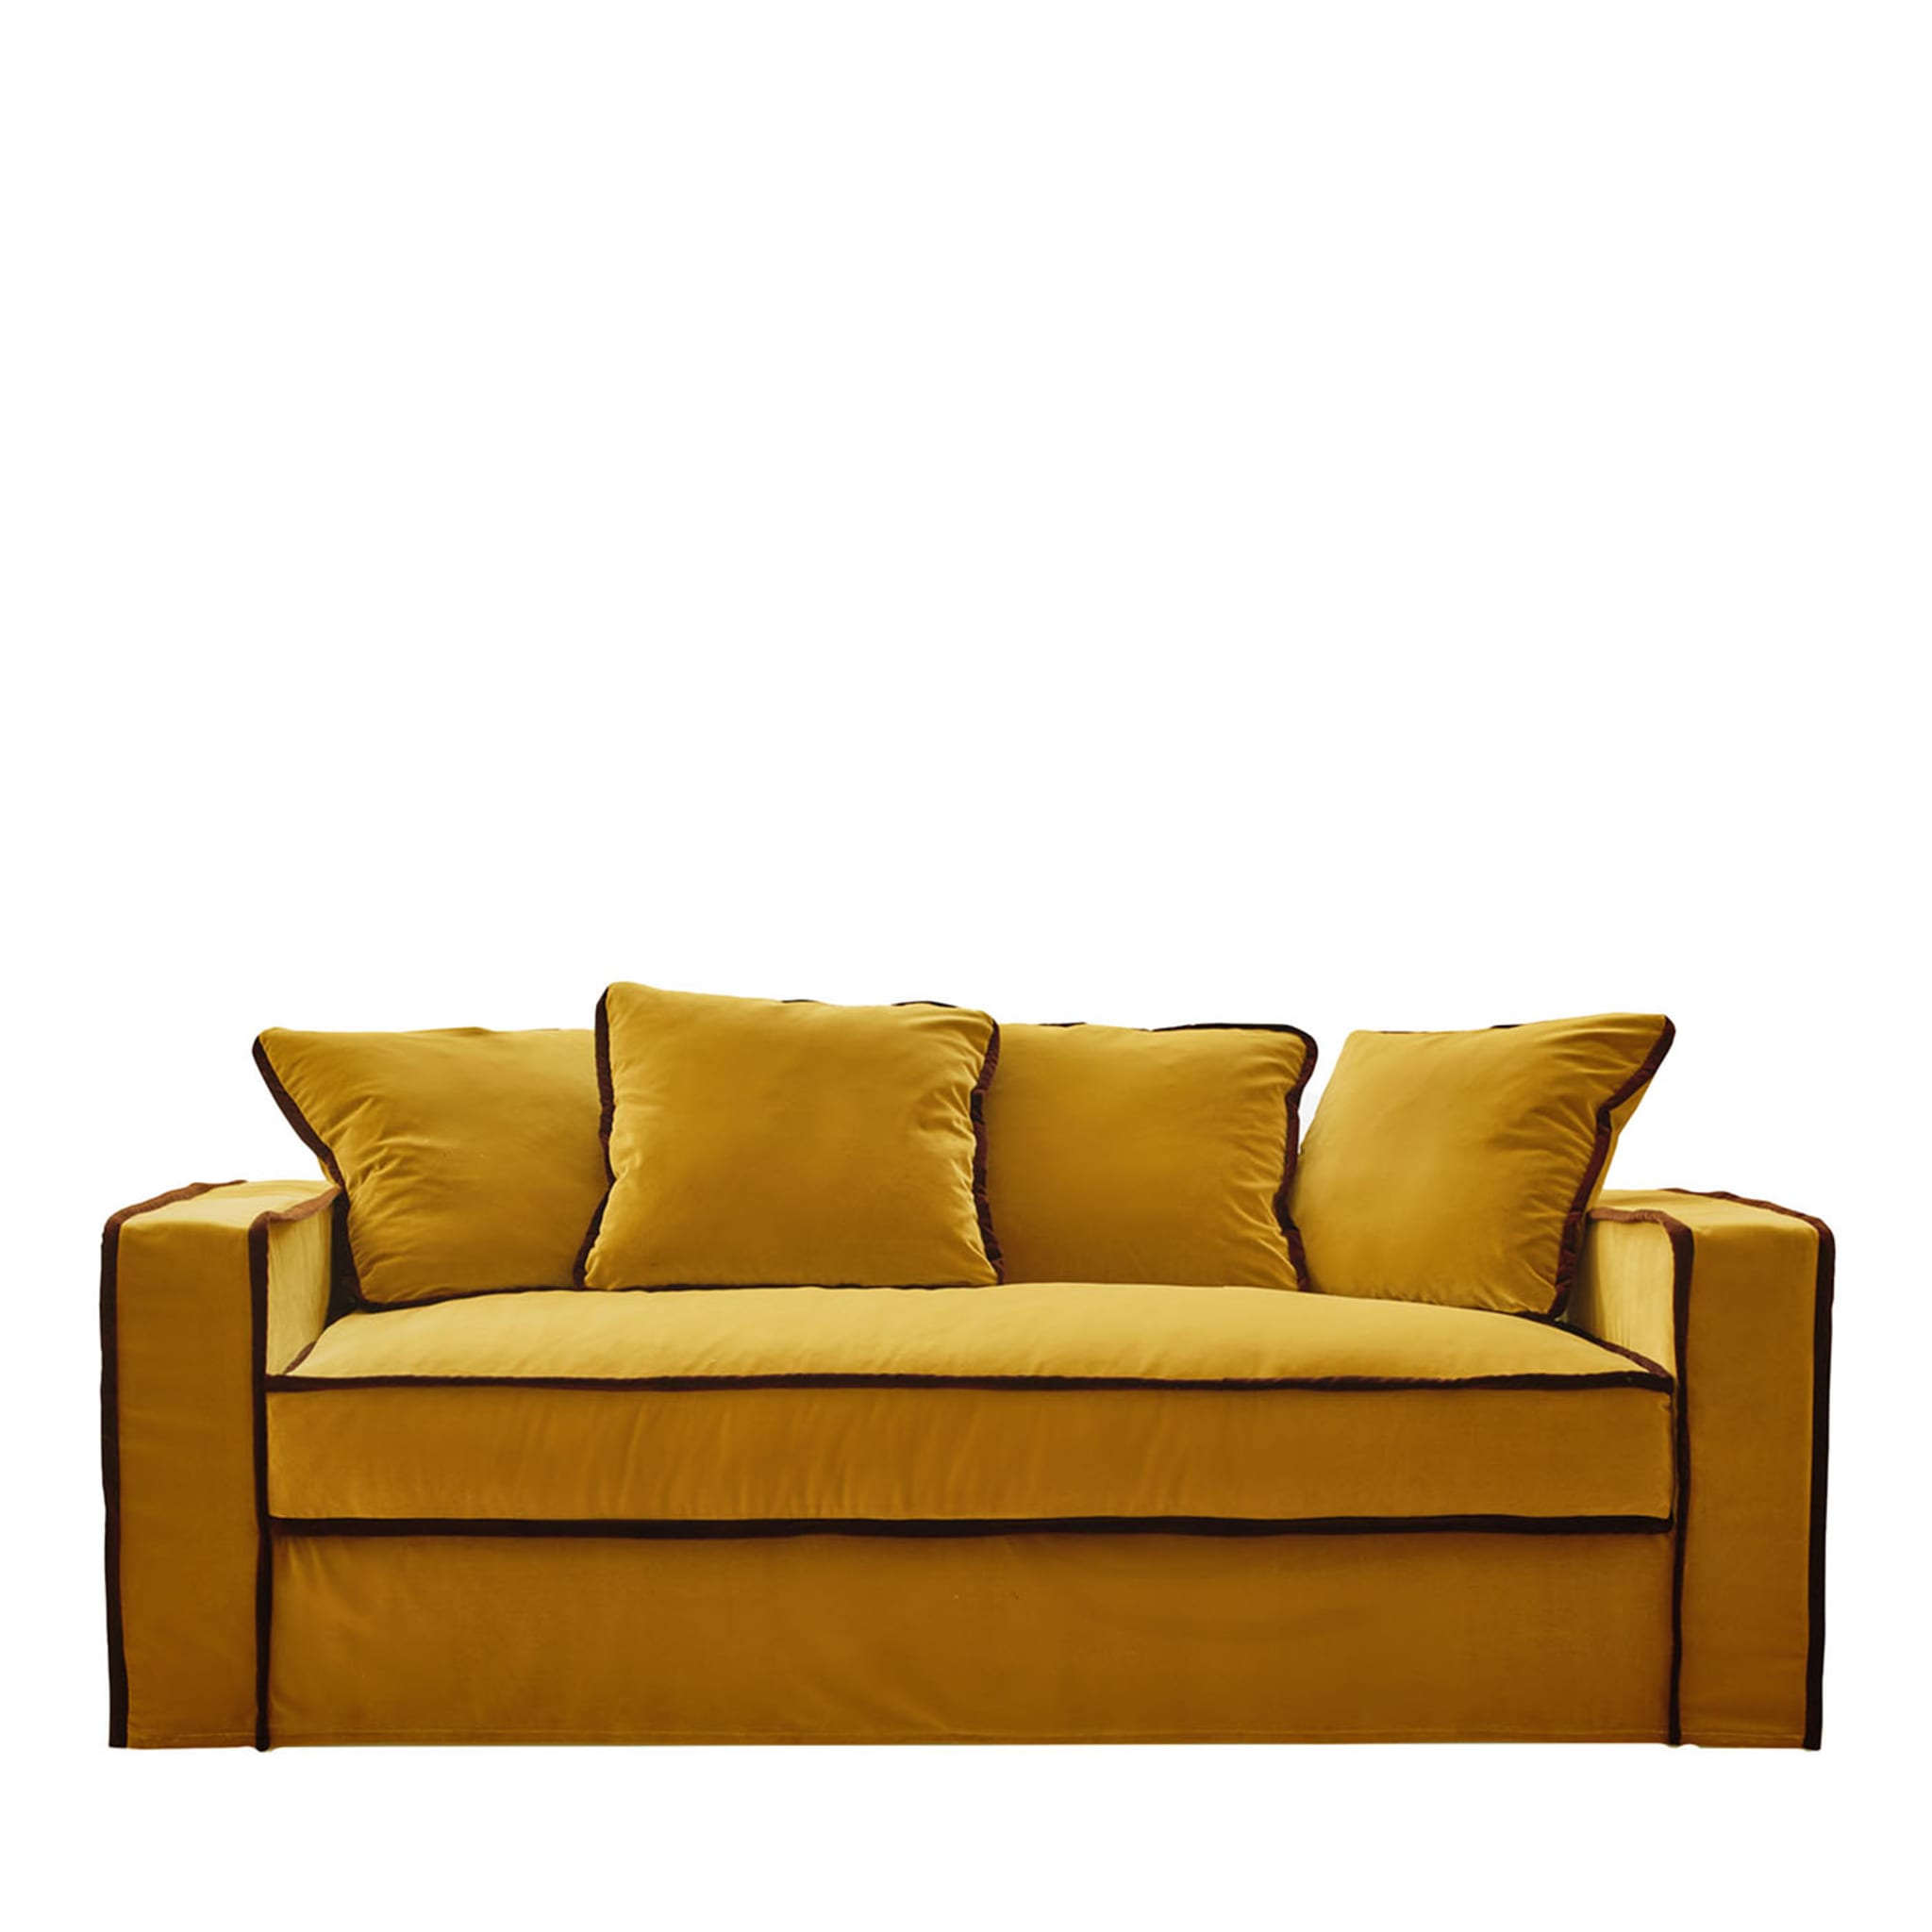 Rafaella Gold & Bordeaux Velvet Sofa - Main view